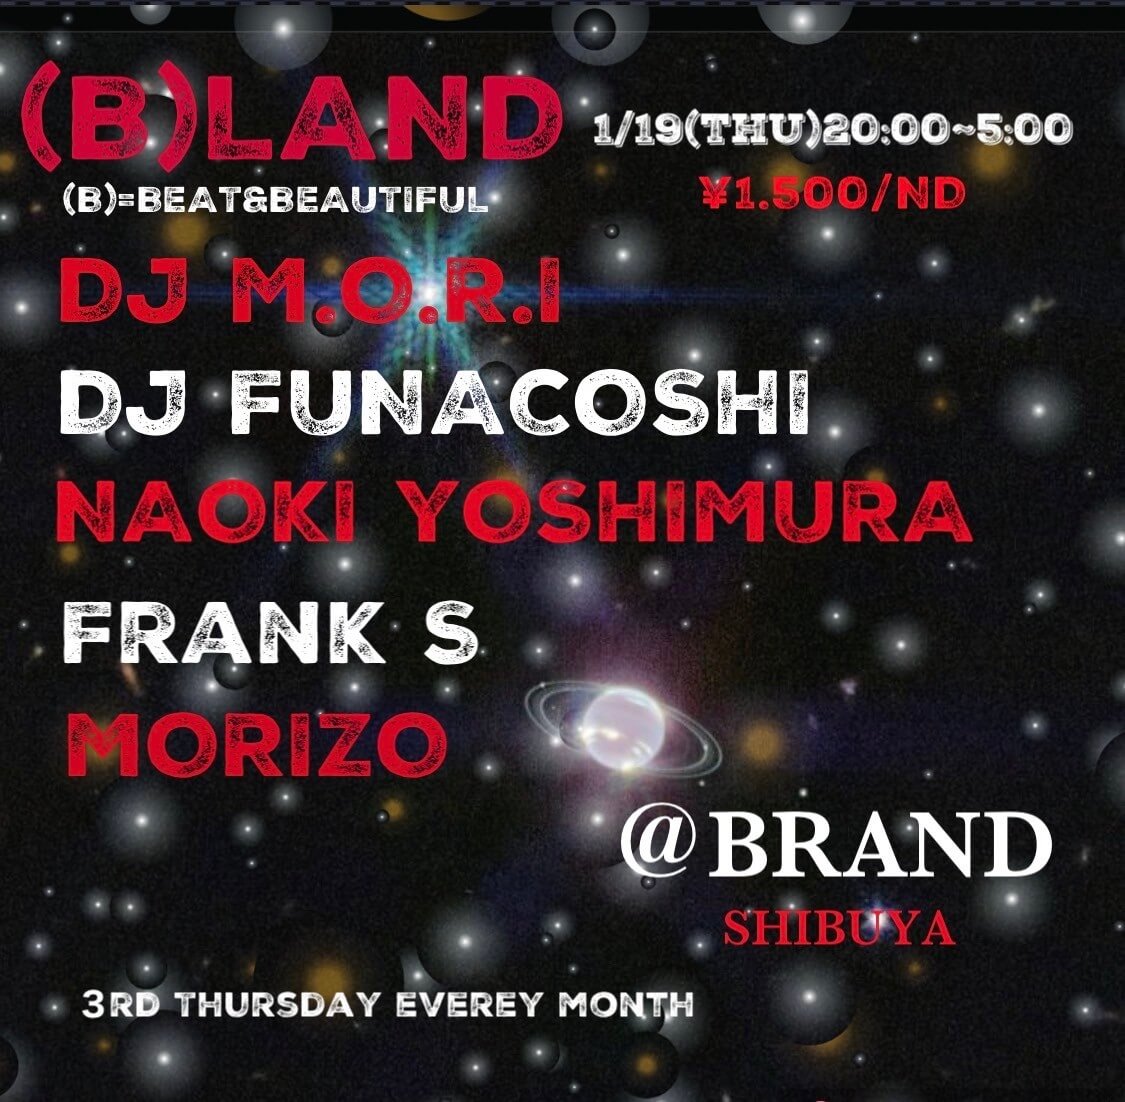 （B）LAND 2023年01月19日（木曜日）に渋谷 クラブのBRAND SHIBUYAで開催されるHOUSEイベント